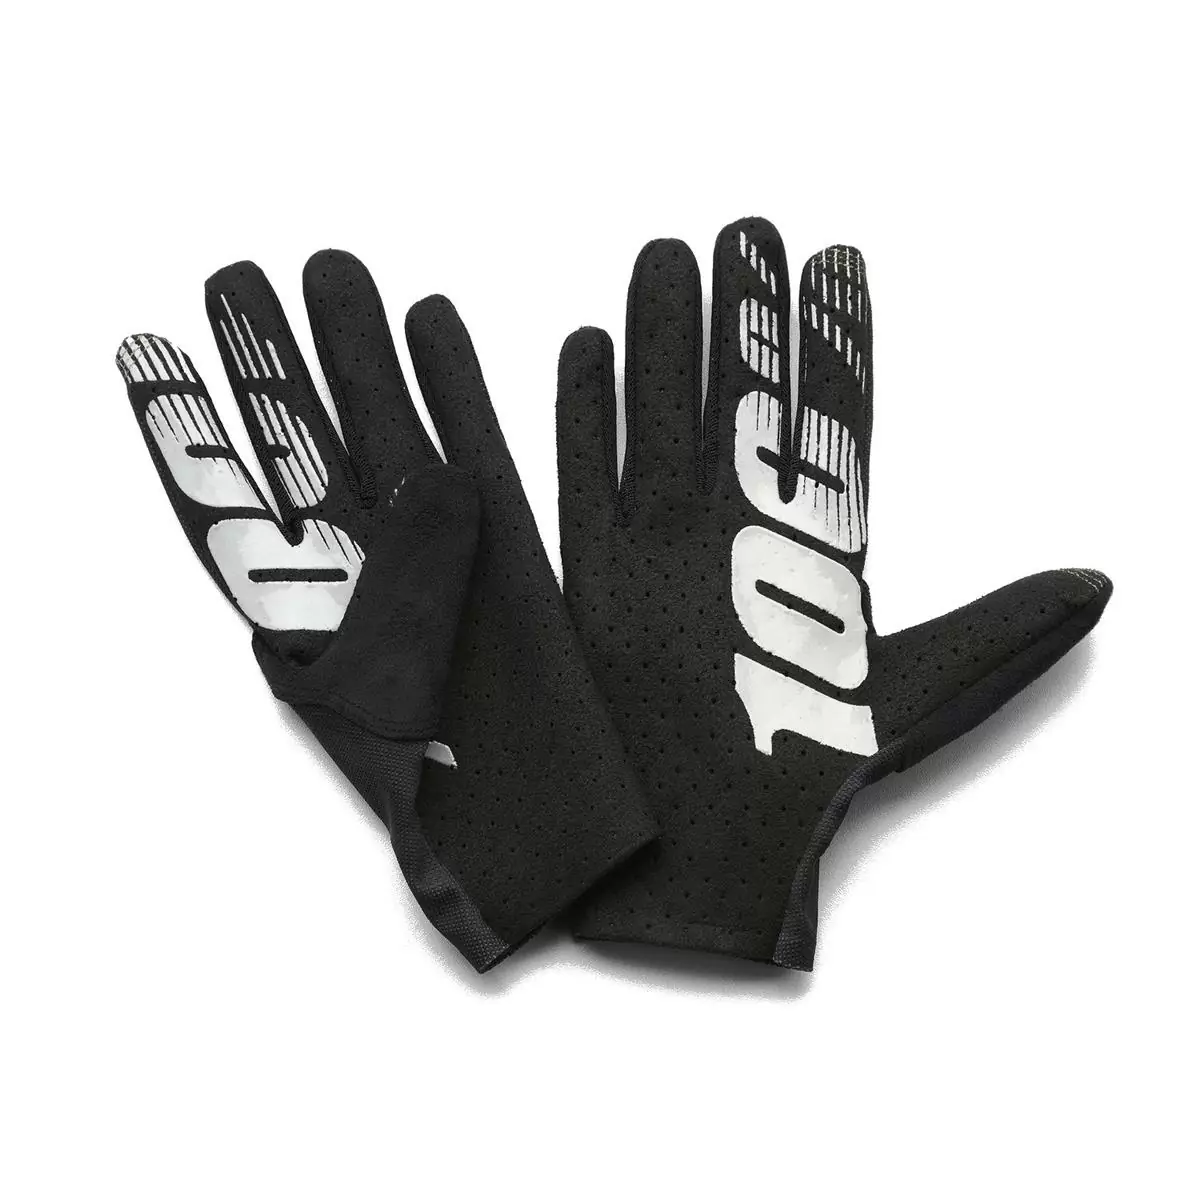 Gloves Celium Grey/Black Size M #1